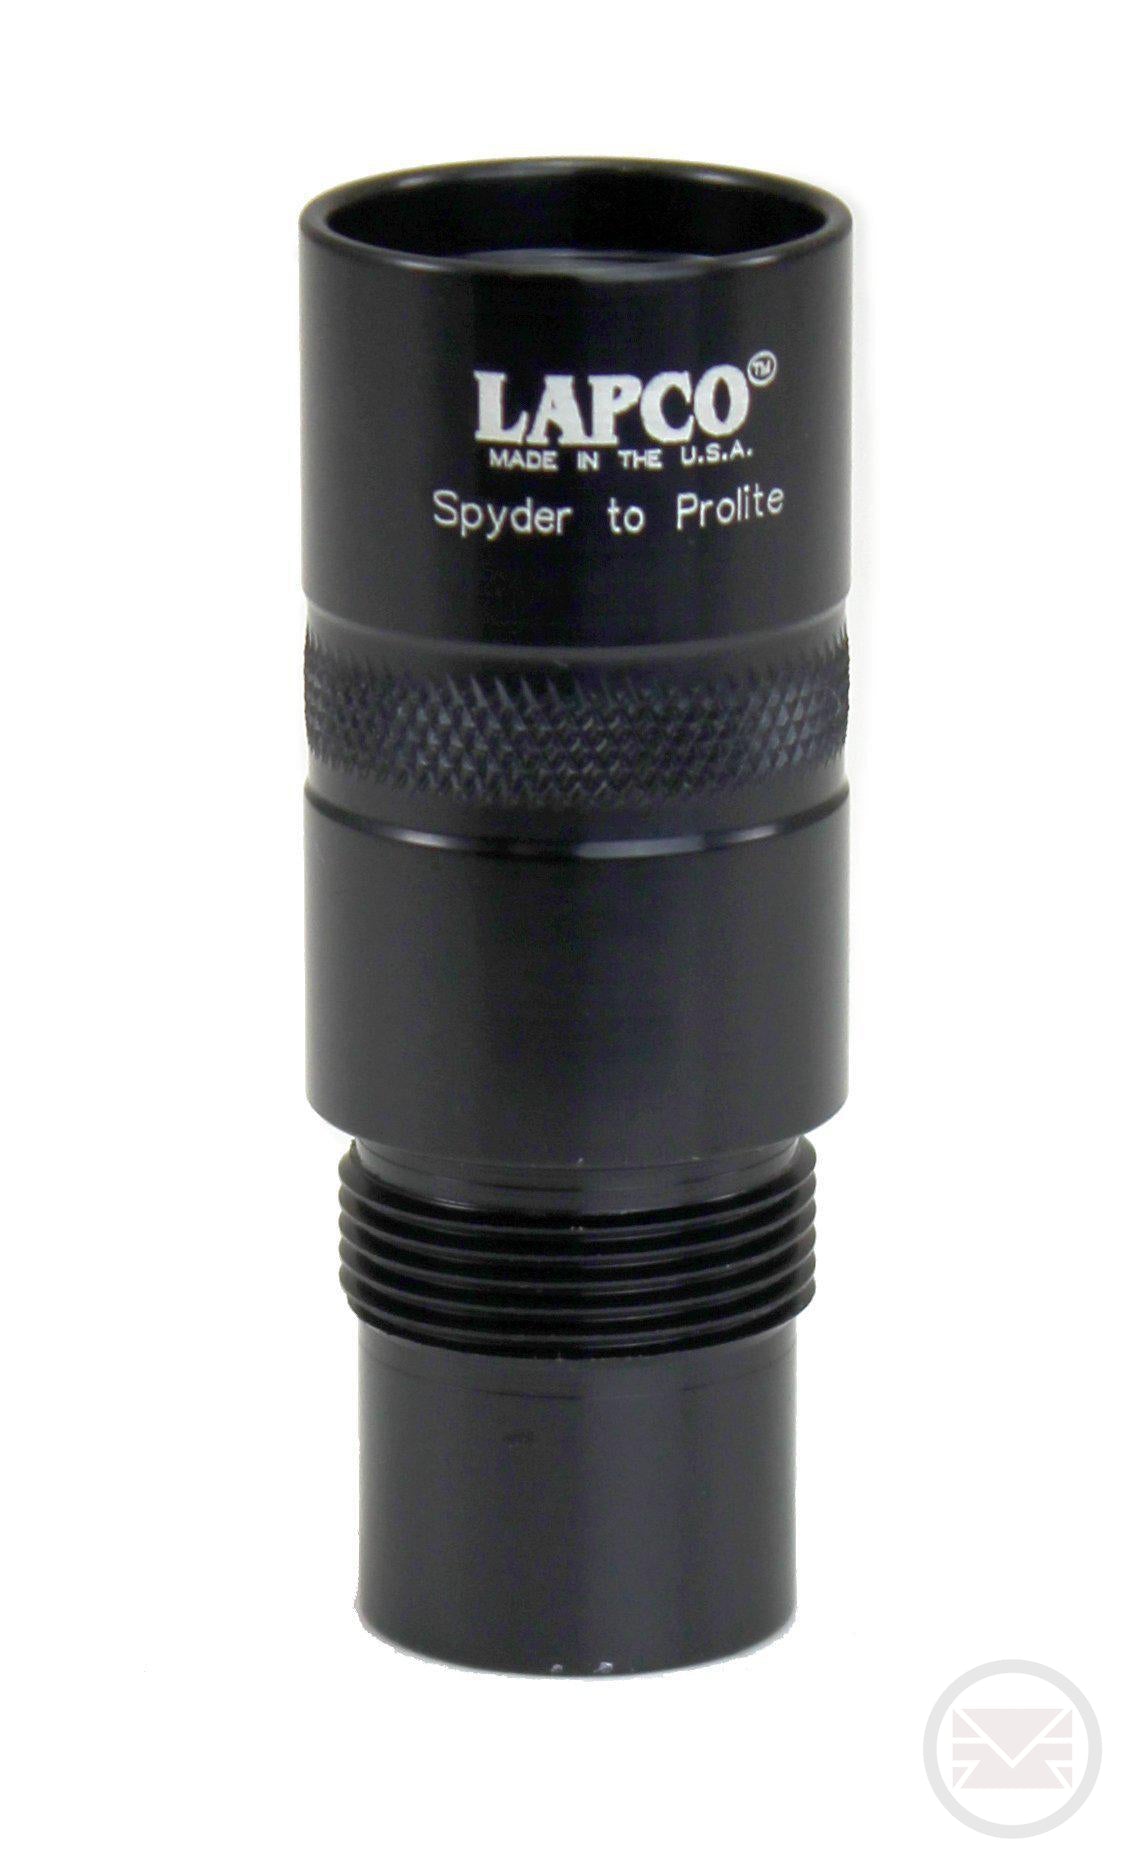 Lapco Spyder to Tippmann A5 Paintball Barrel Adapter